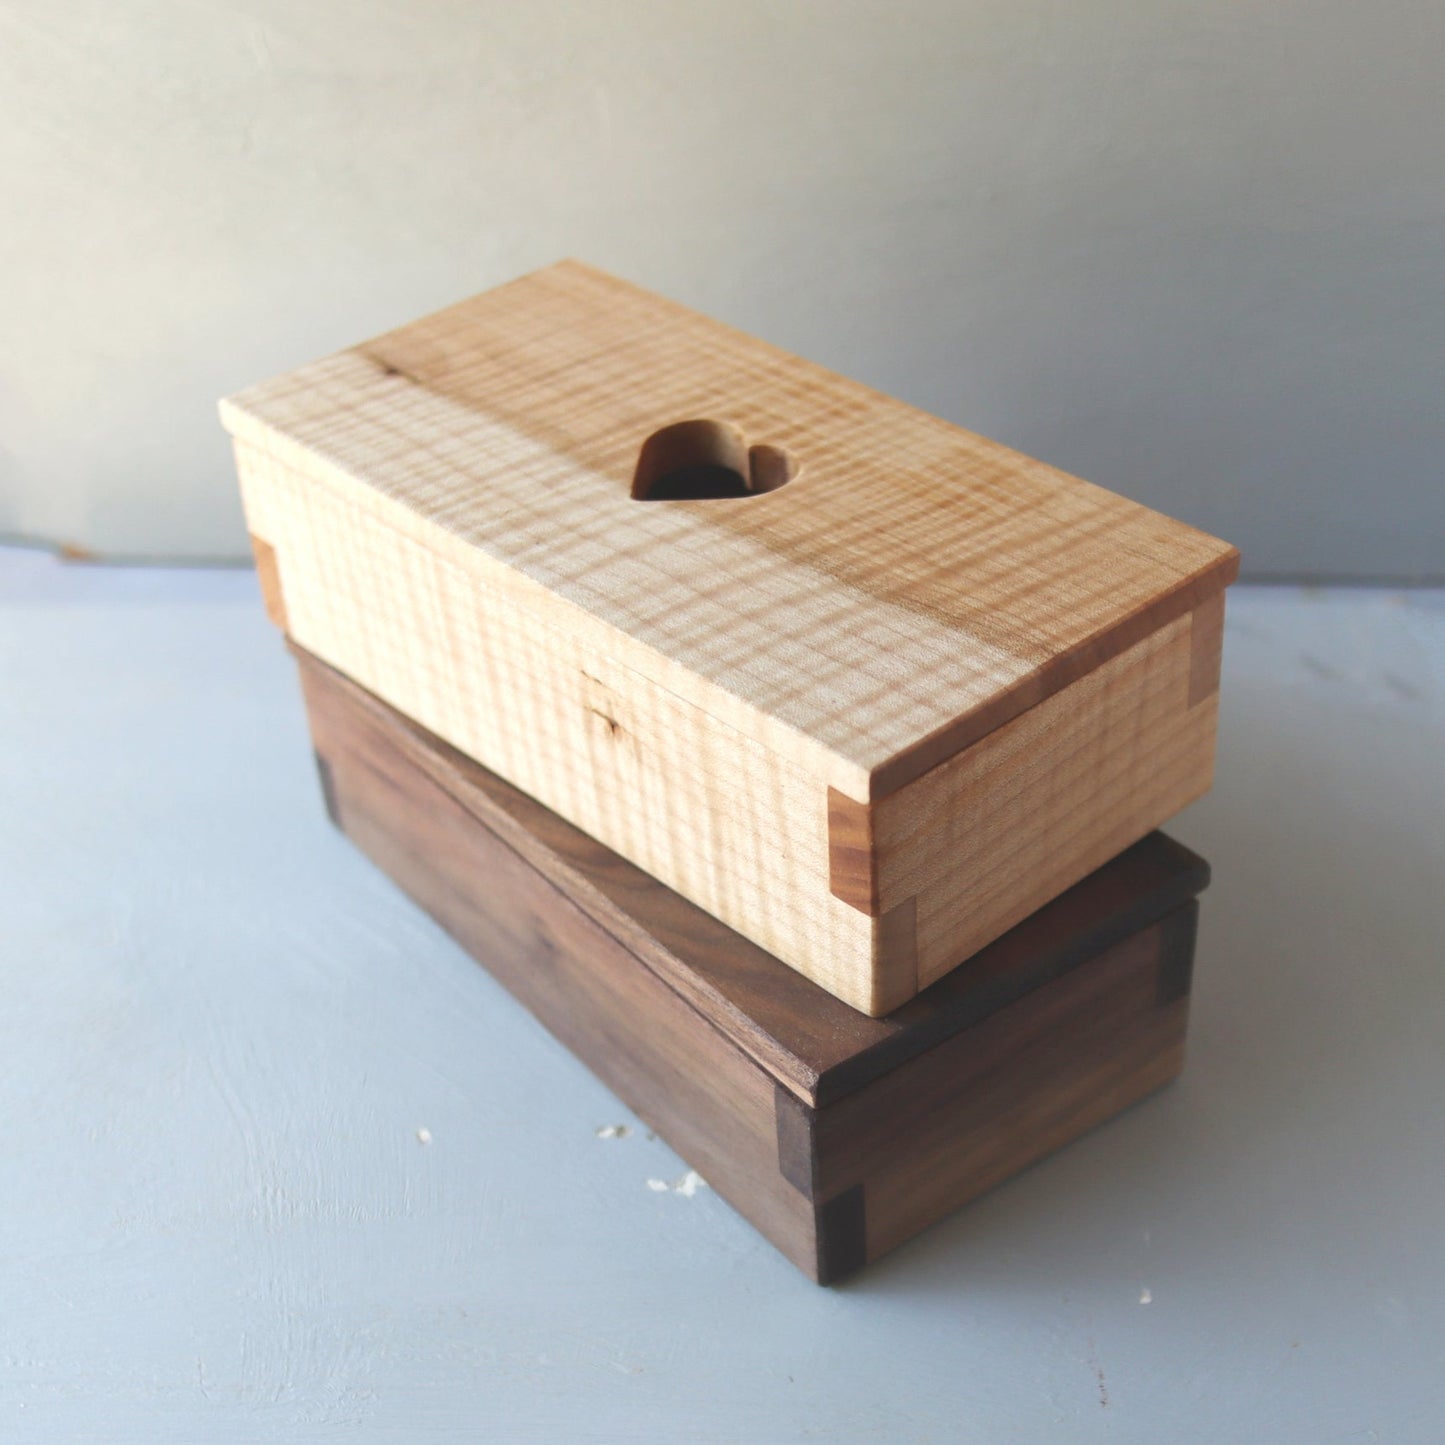 Lap Joint Wooden boxes